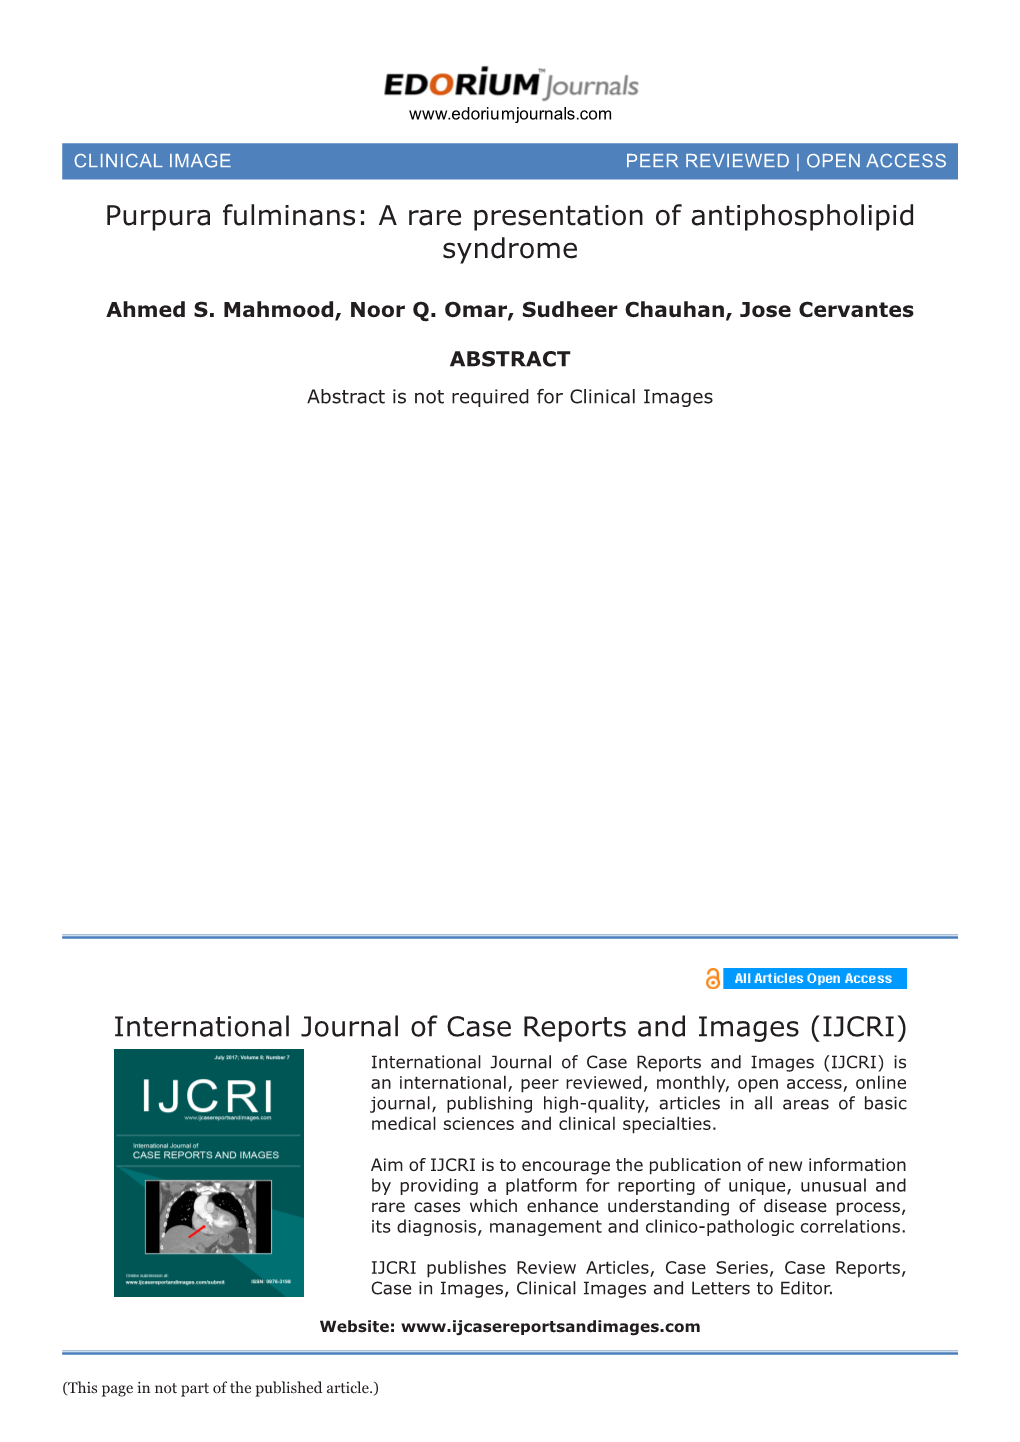 International Journal of Case Reports and Images (IJCRI) Purpura